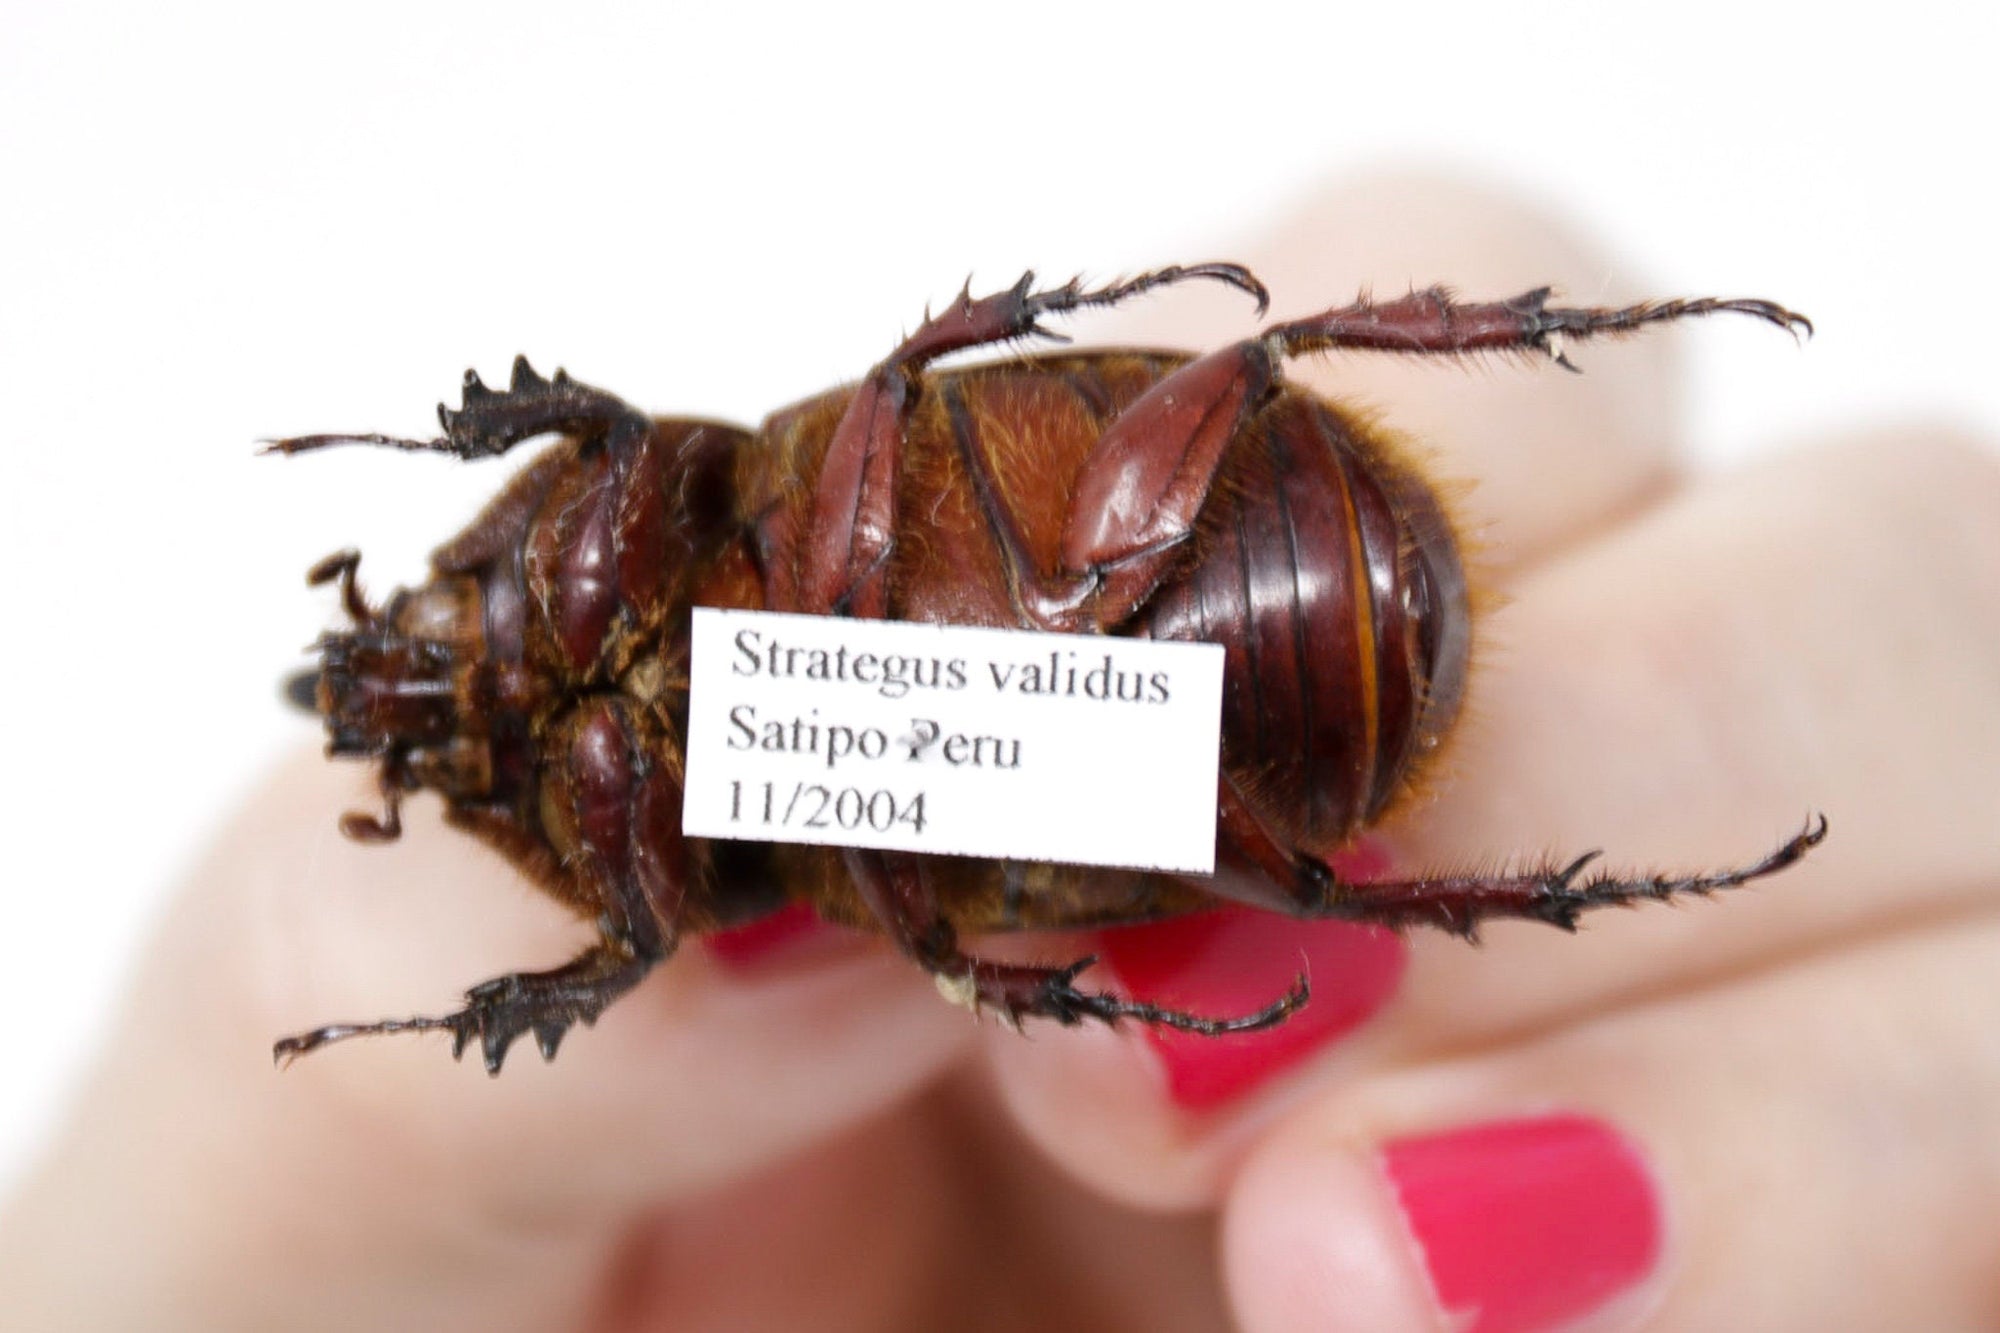 Strategus validus, A1 Real Beetle Specimen, Entomology Taxidermy #OC03